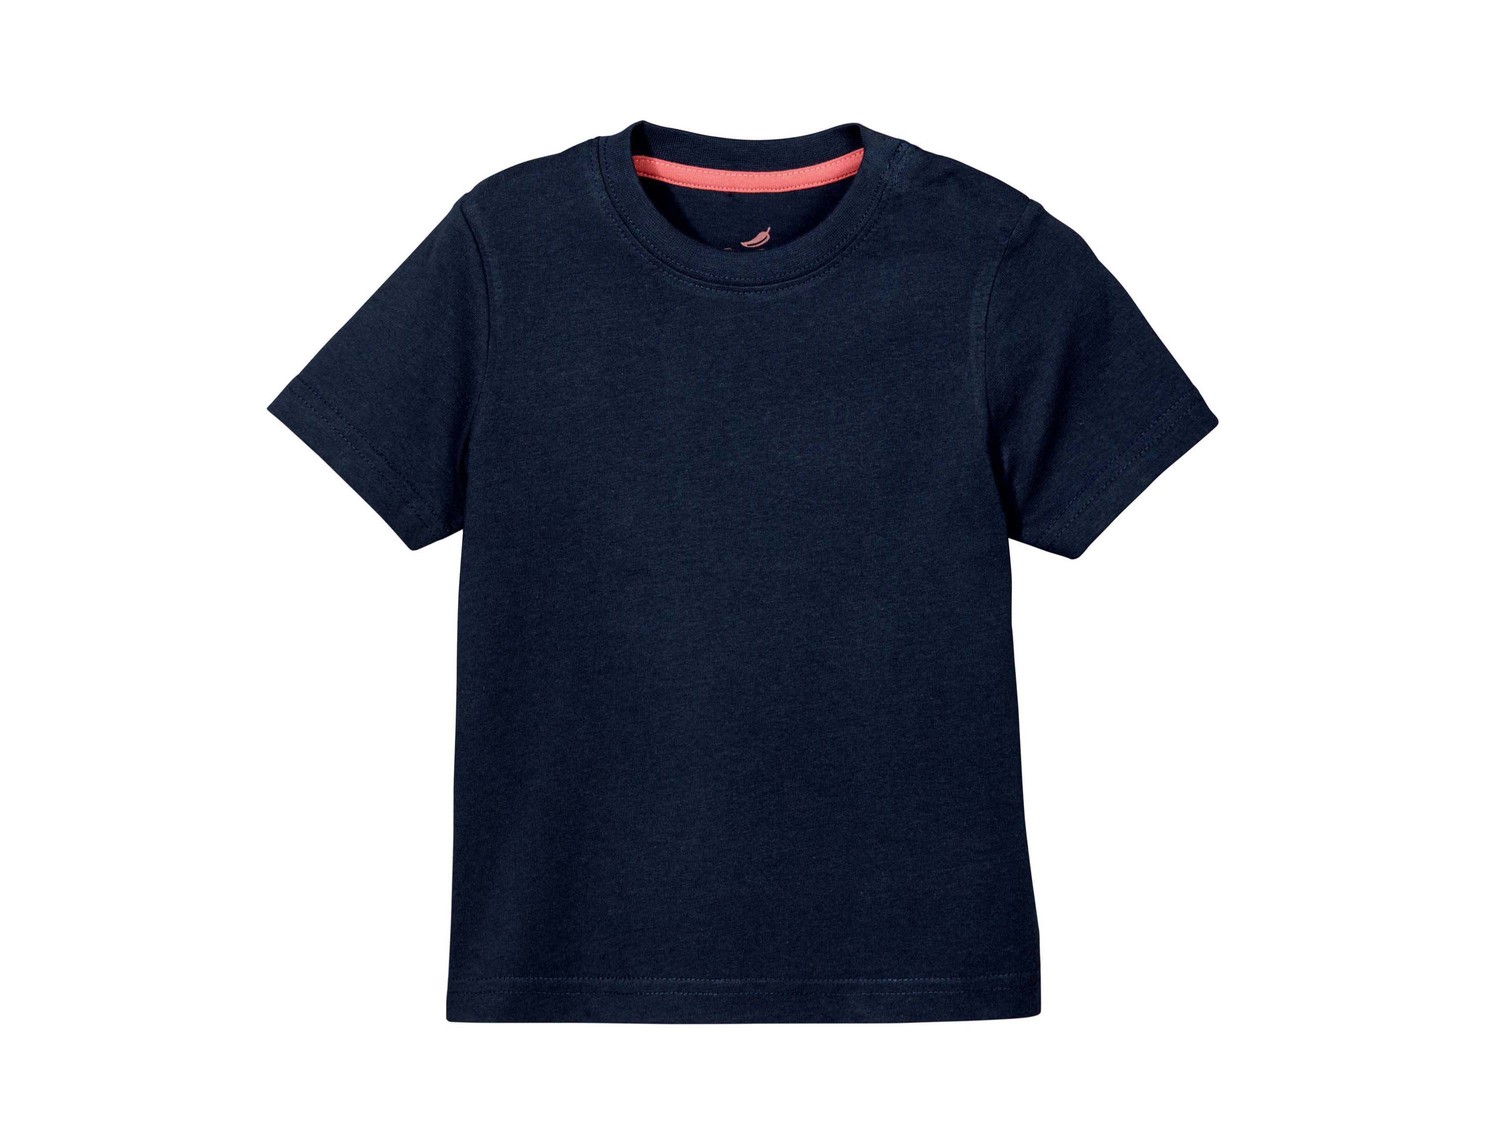 T-shirt da bambino, 3 pezzi Lupilu, prezzo 5.99 &#8364; 
Misure: 1-6 anni
- ...